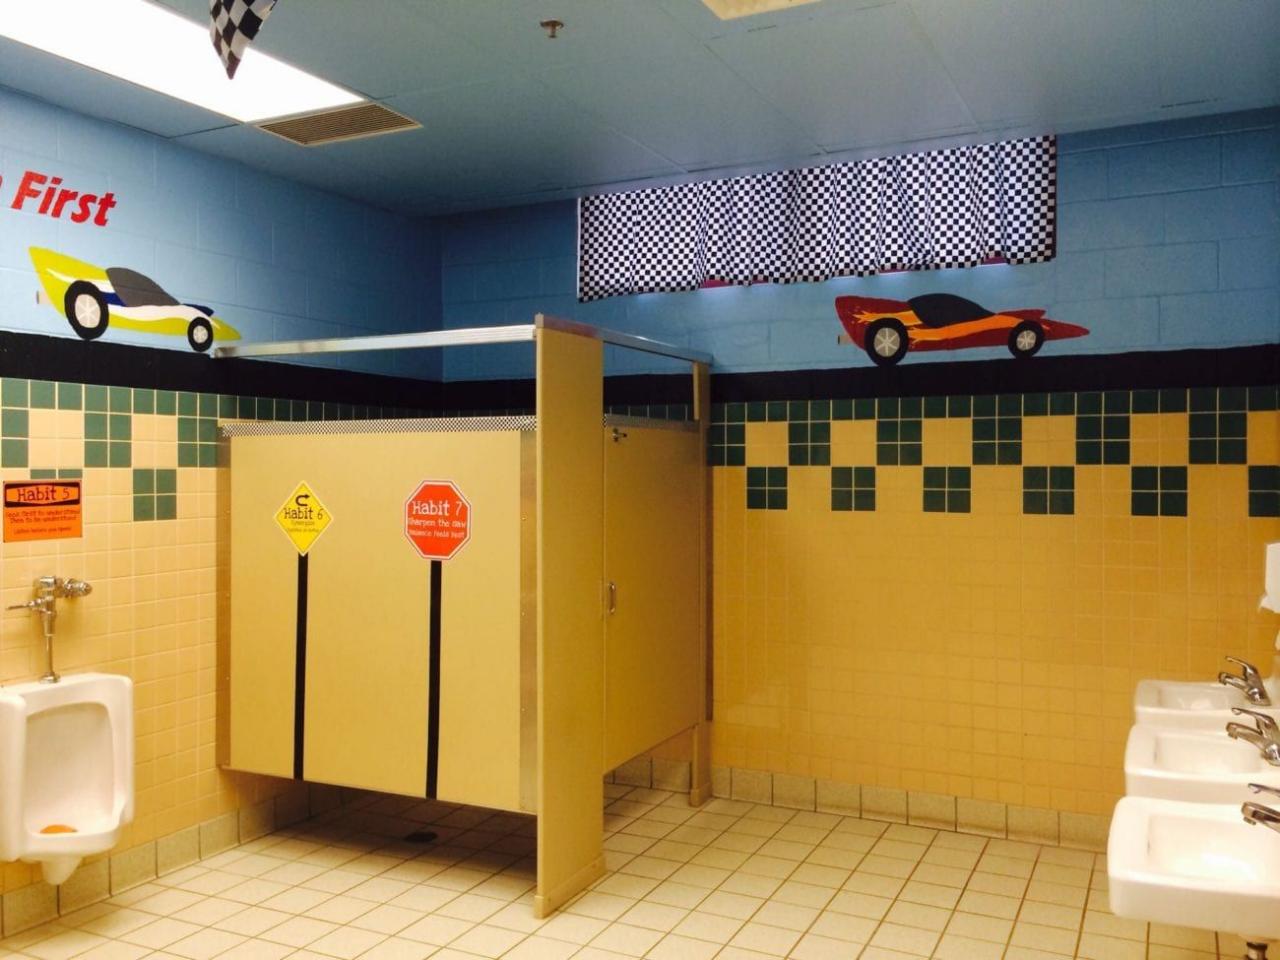 School Bathrooms That Are Truly Game Changers School bathroom, School